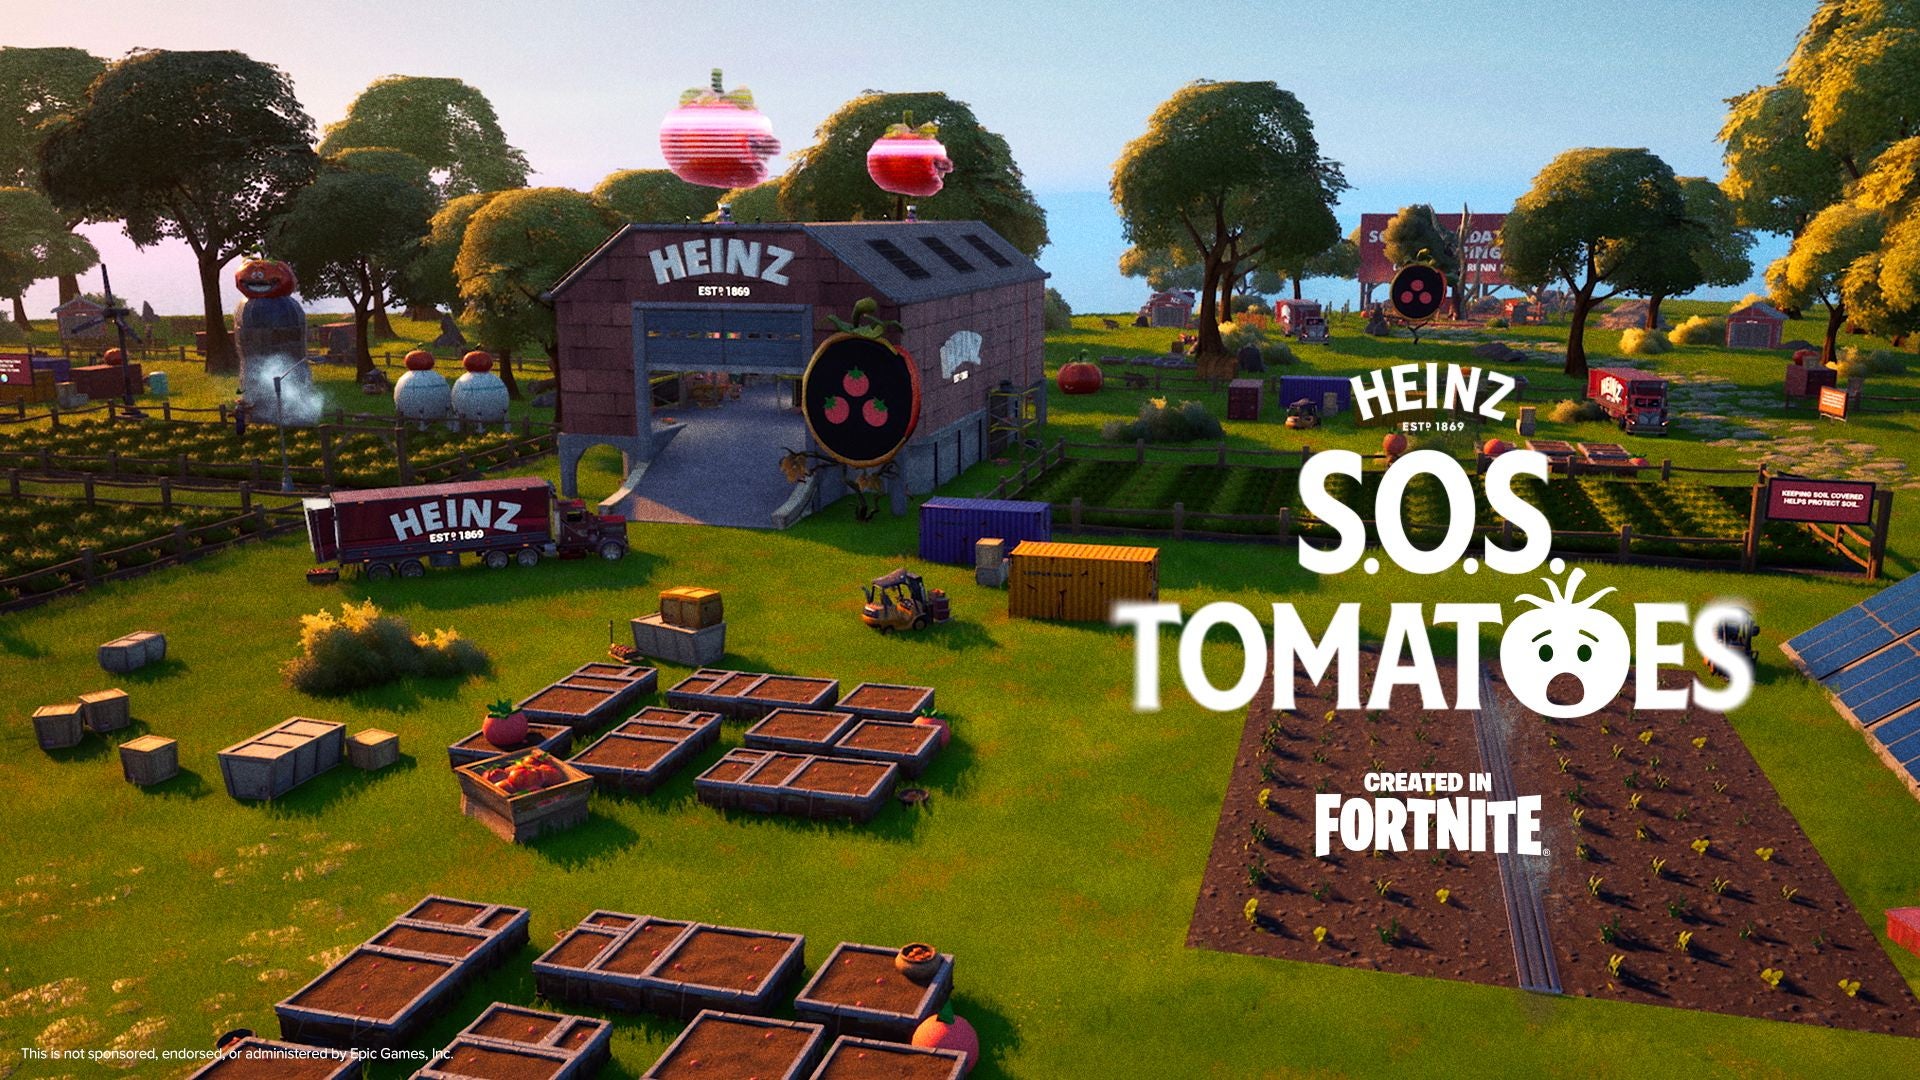 Fortnite Heinz SOS Tomatoes.